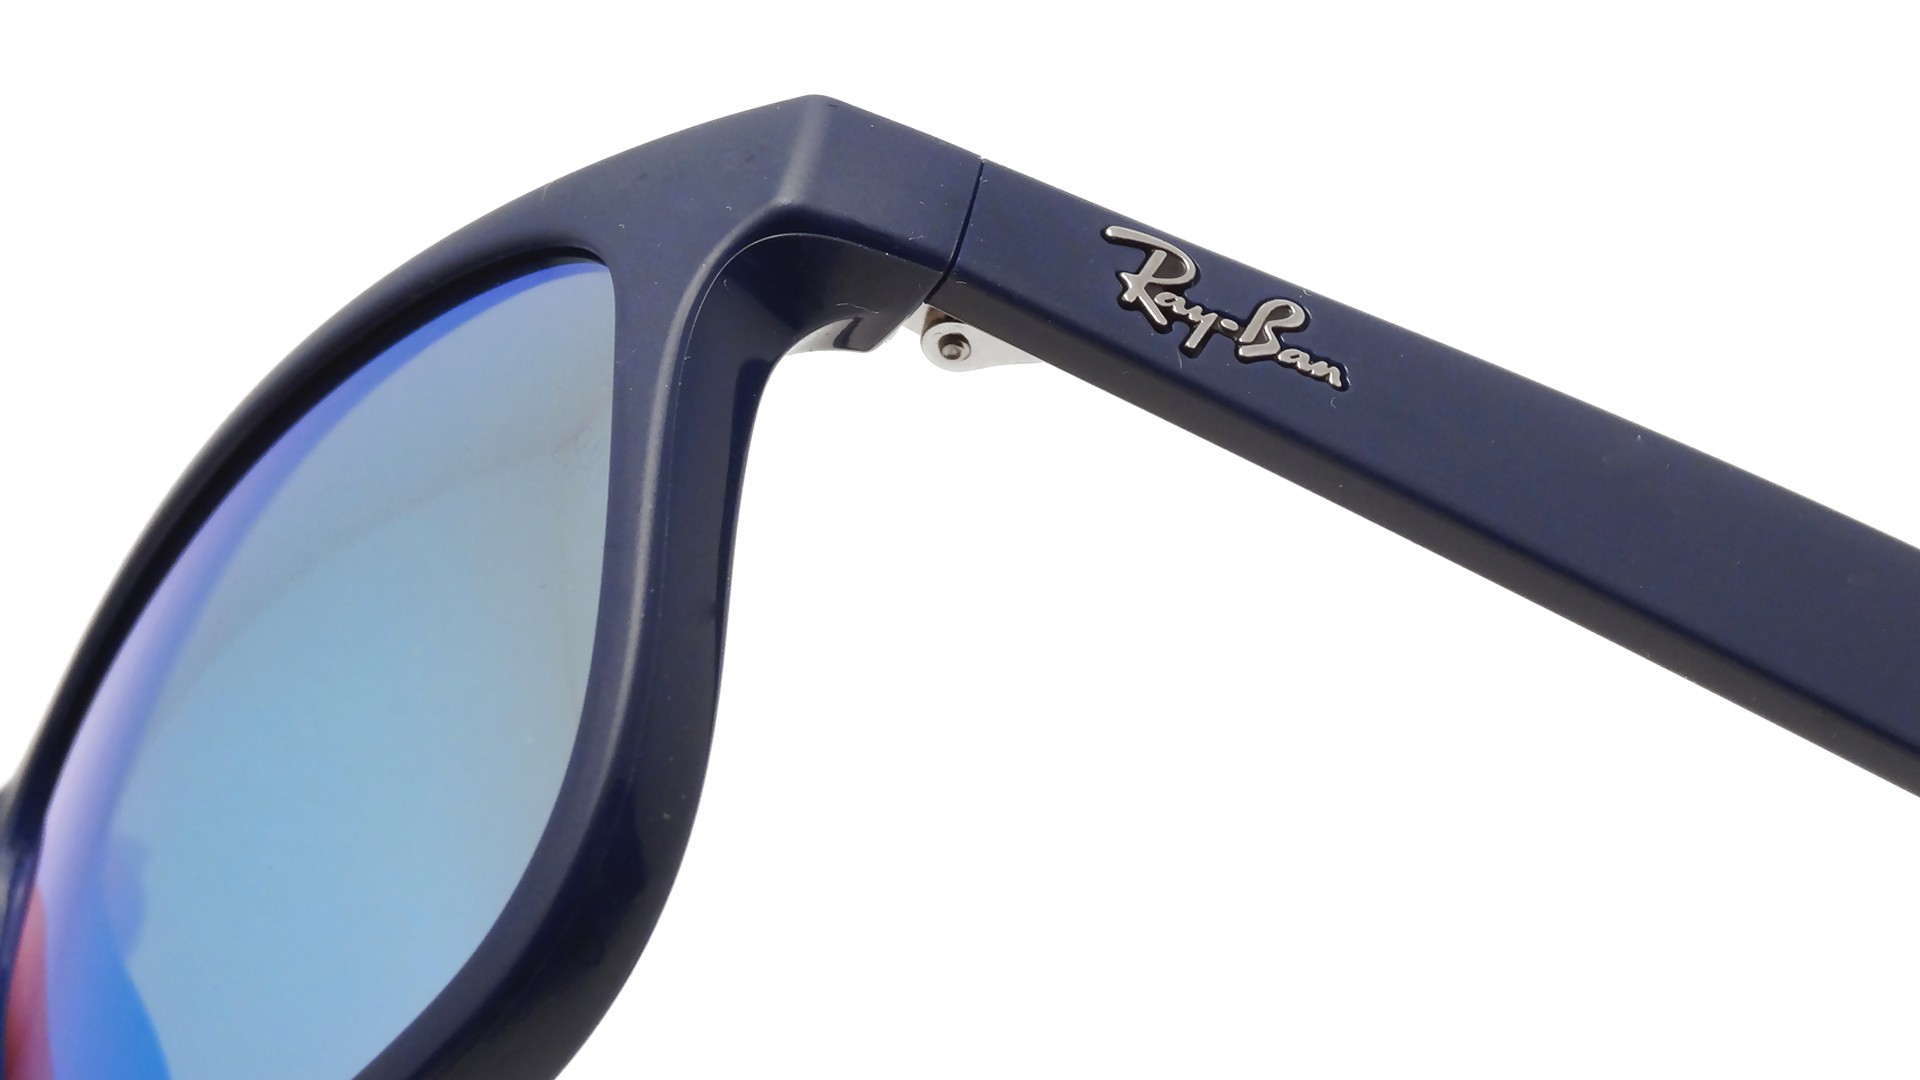 blue frame ray ban sunglasses